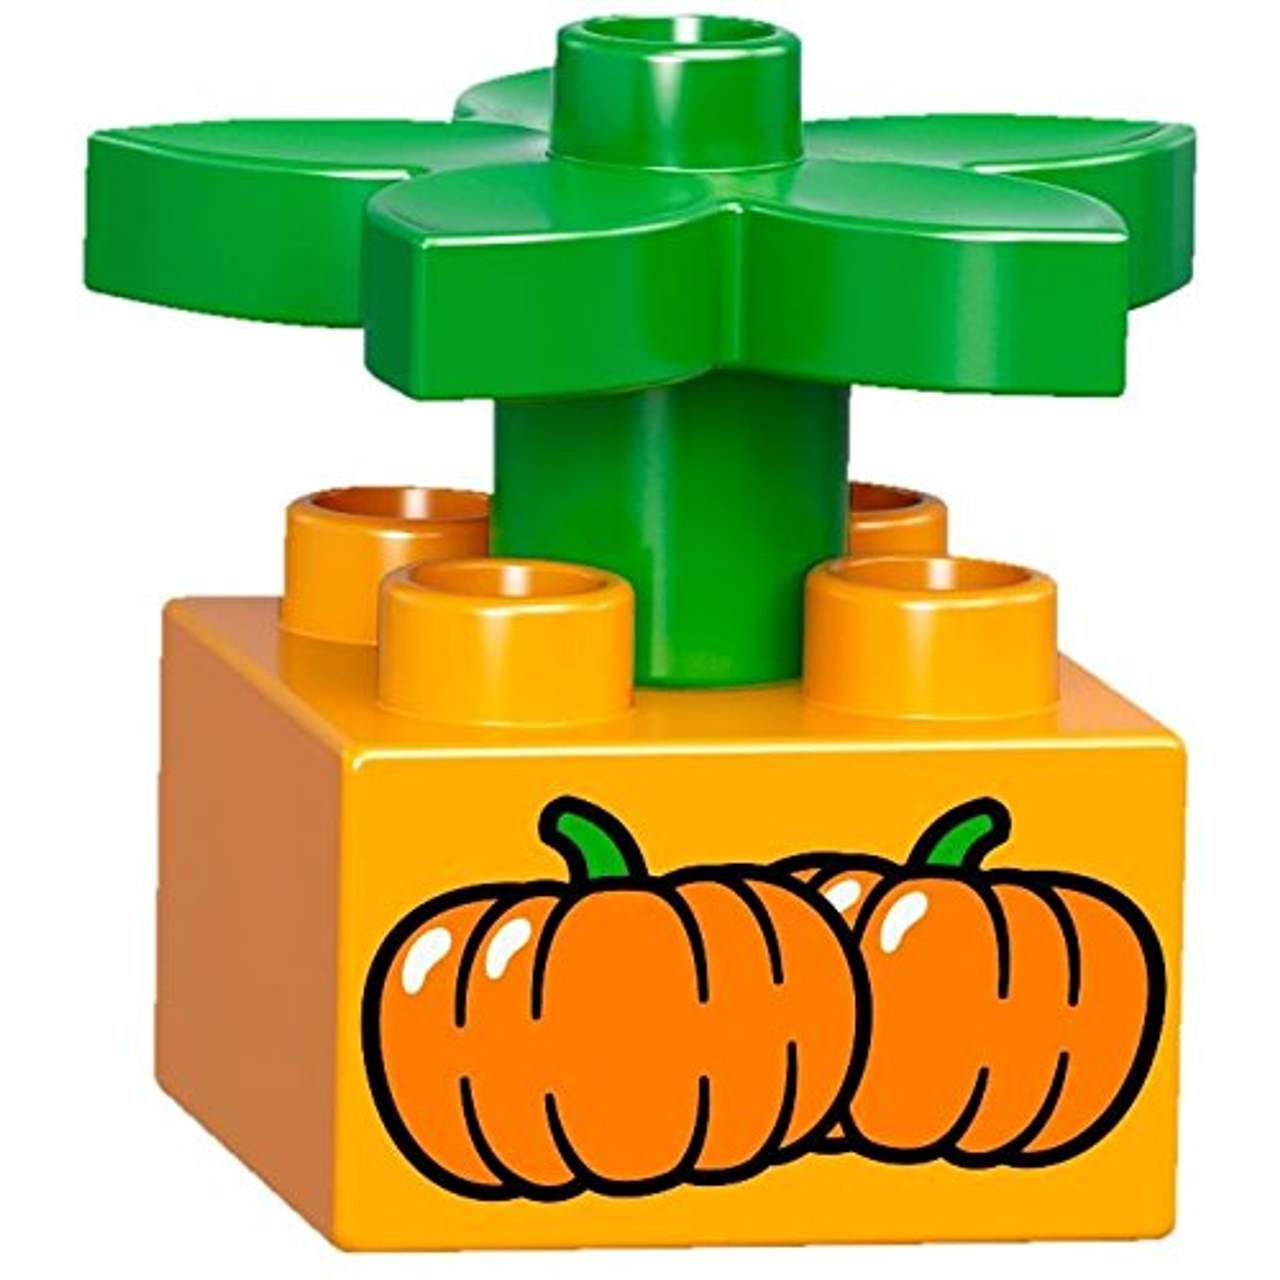 LEGO Duplo 10810 Schiebezug